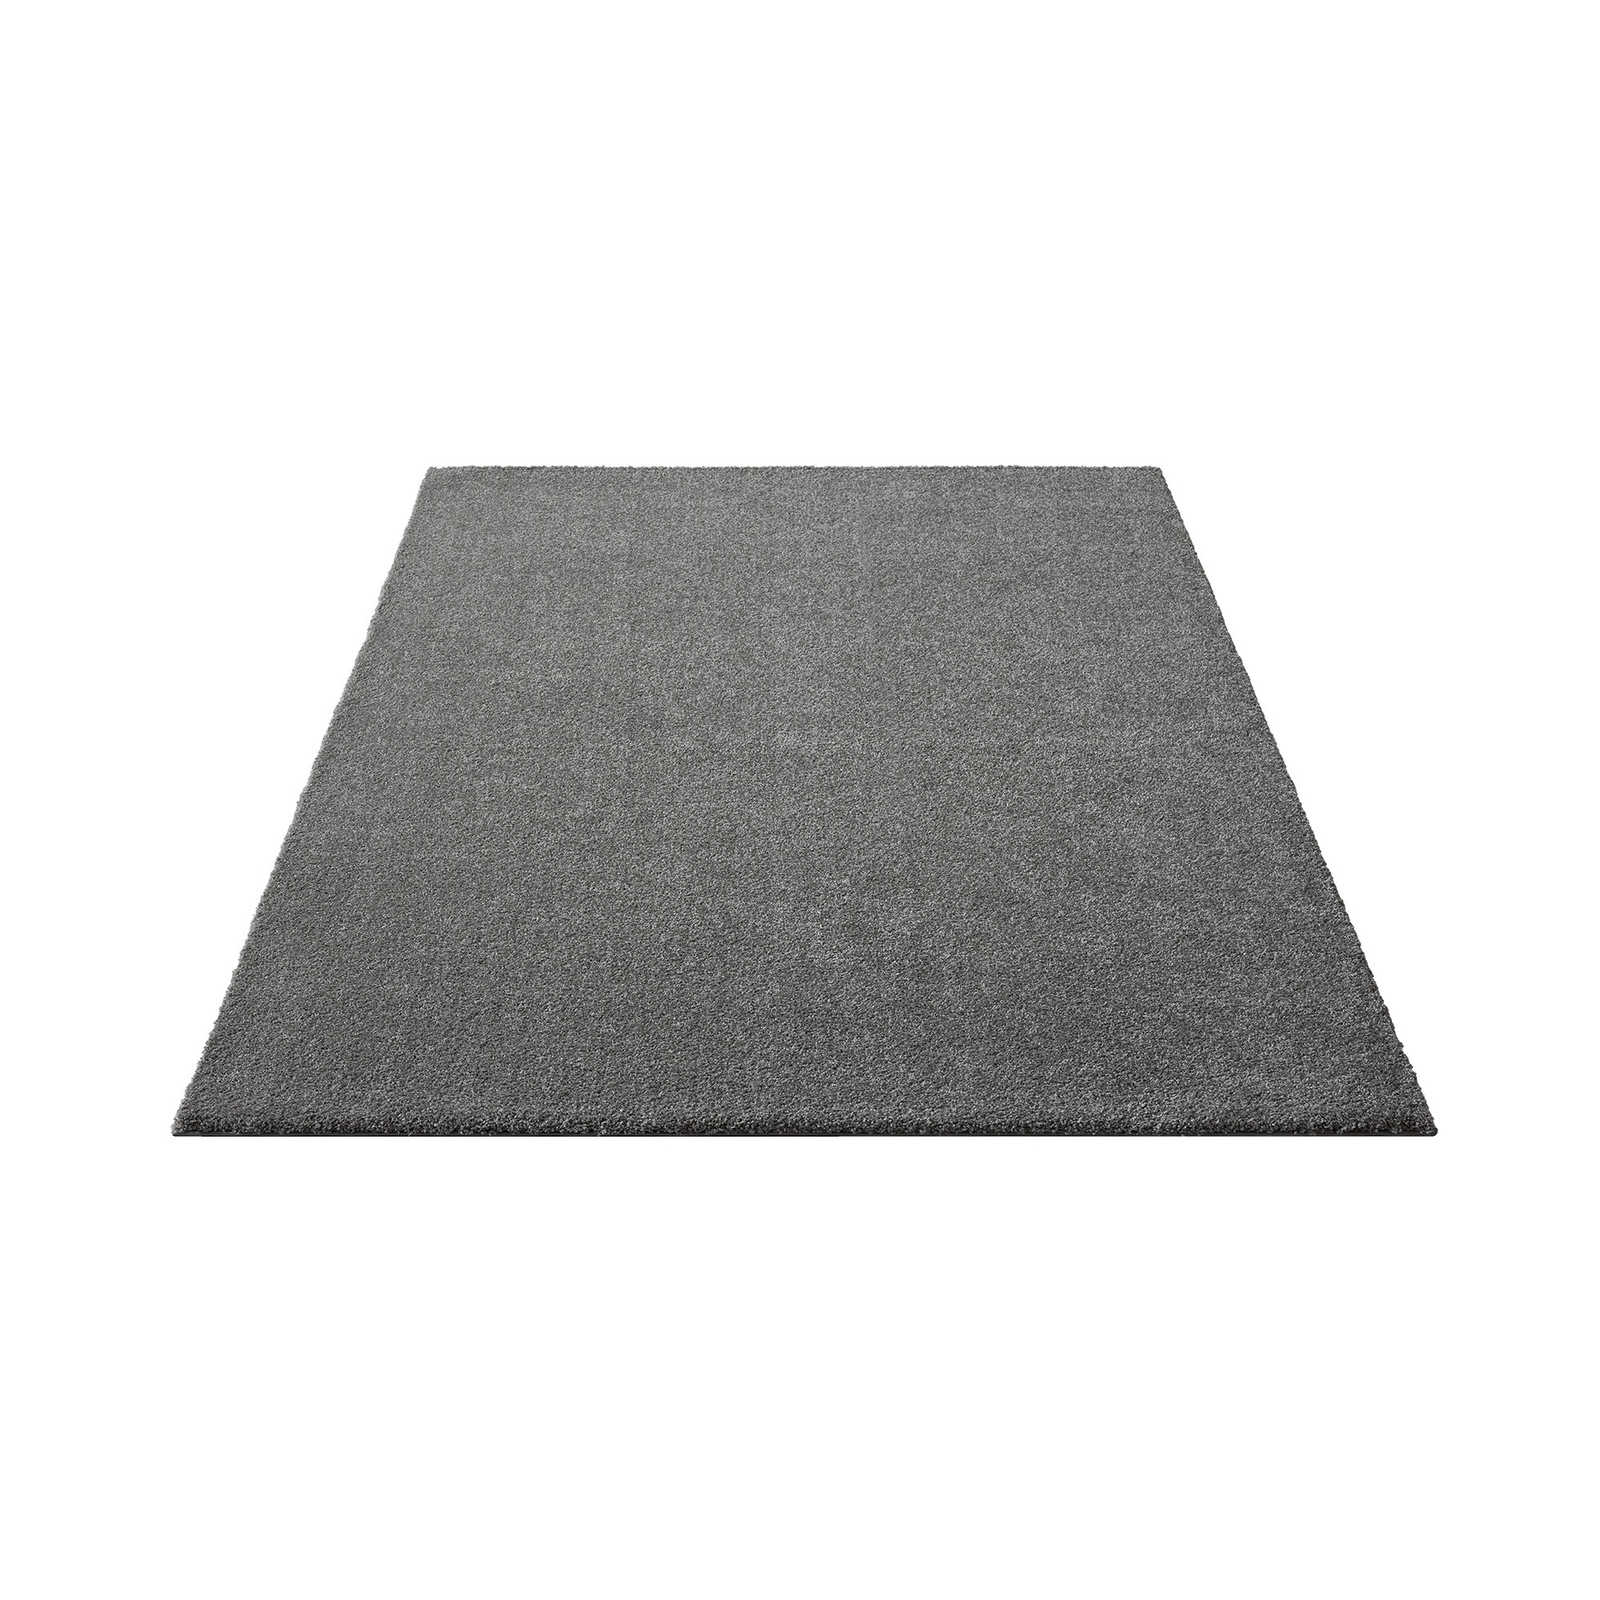 Fluffy short pile carpet in grey - 230 x 160 cm
